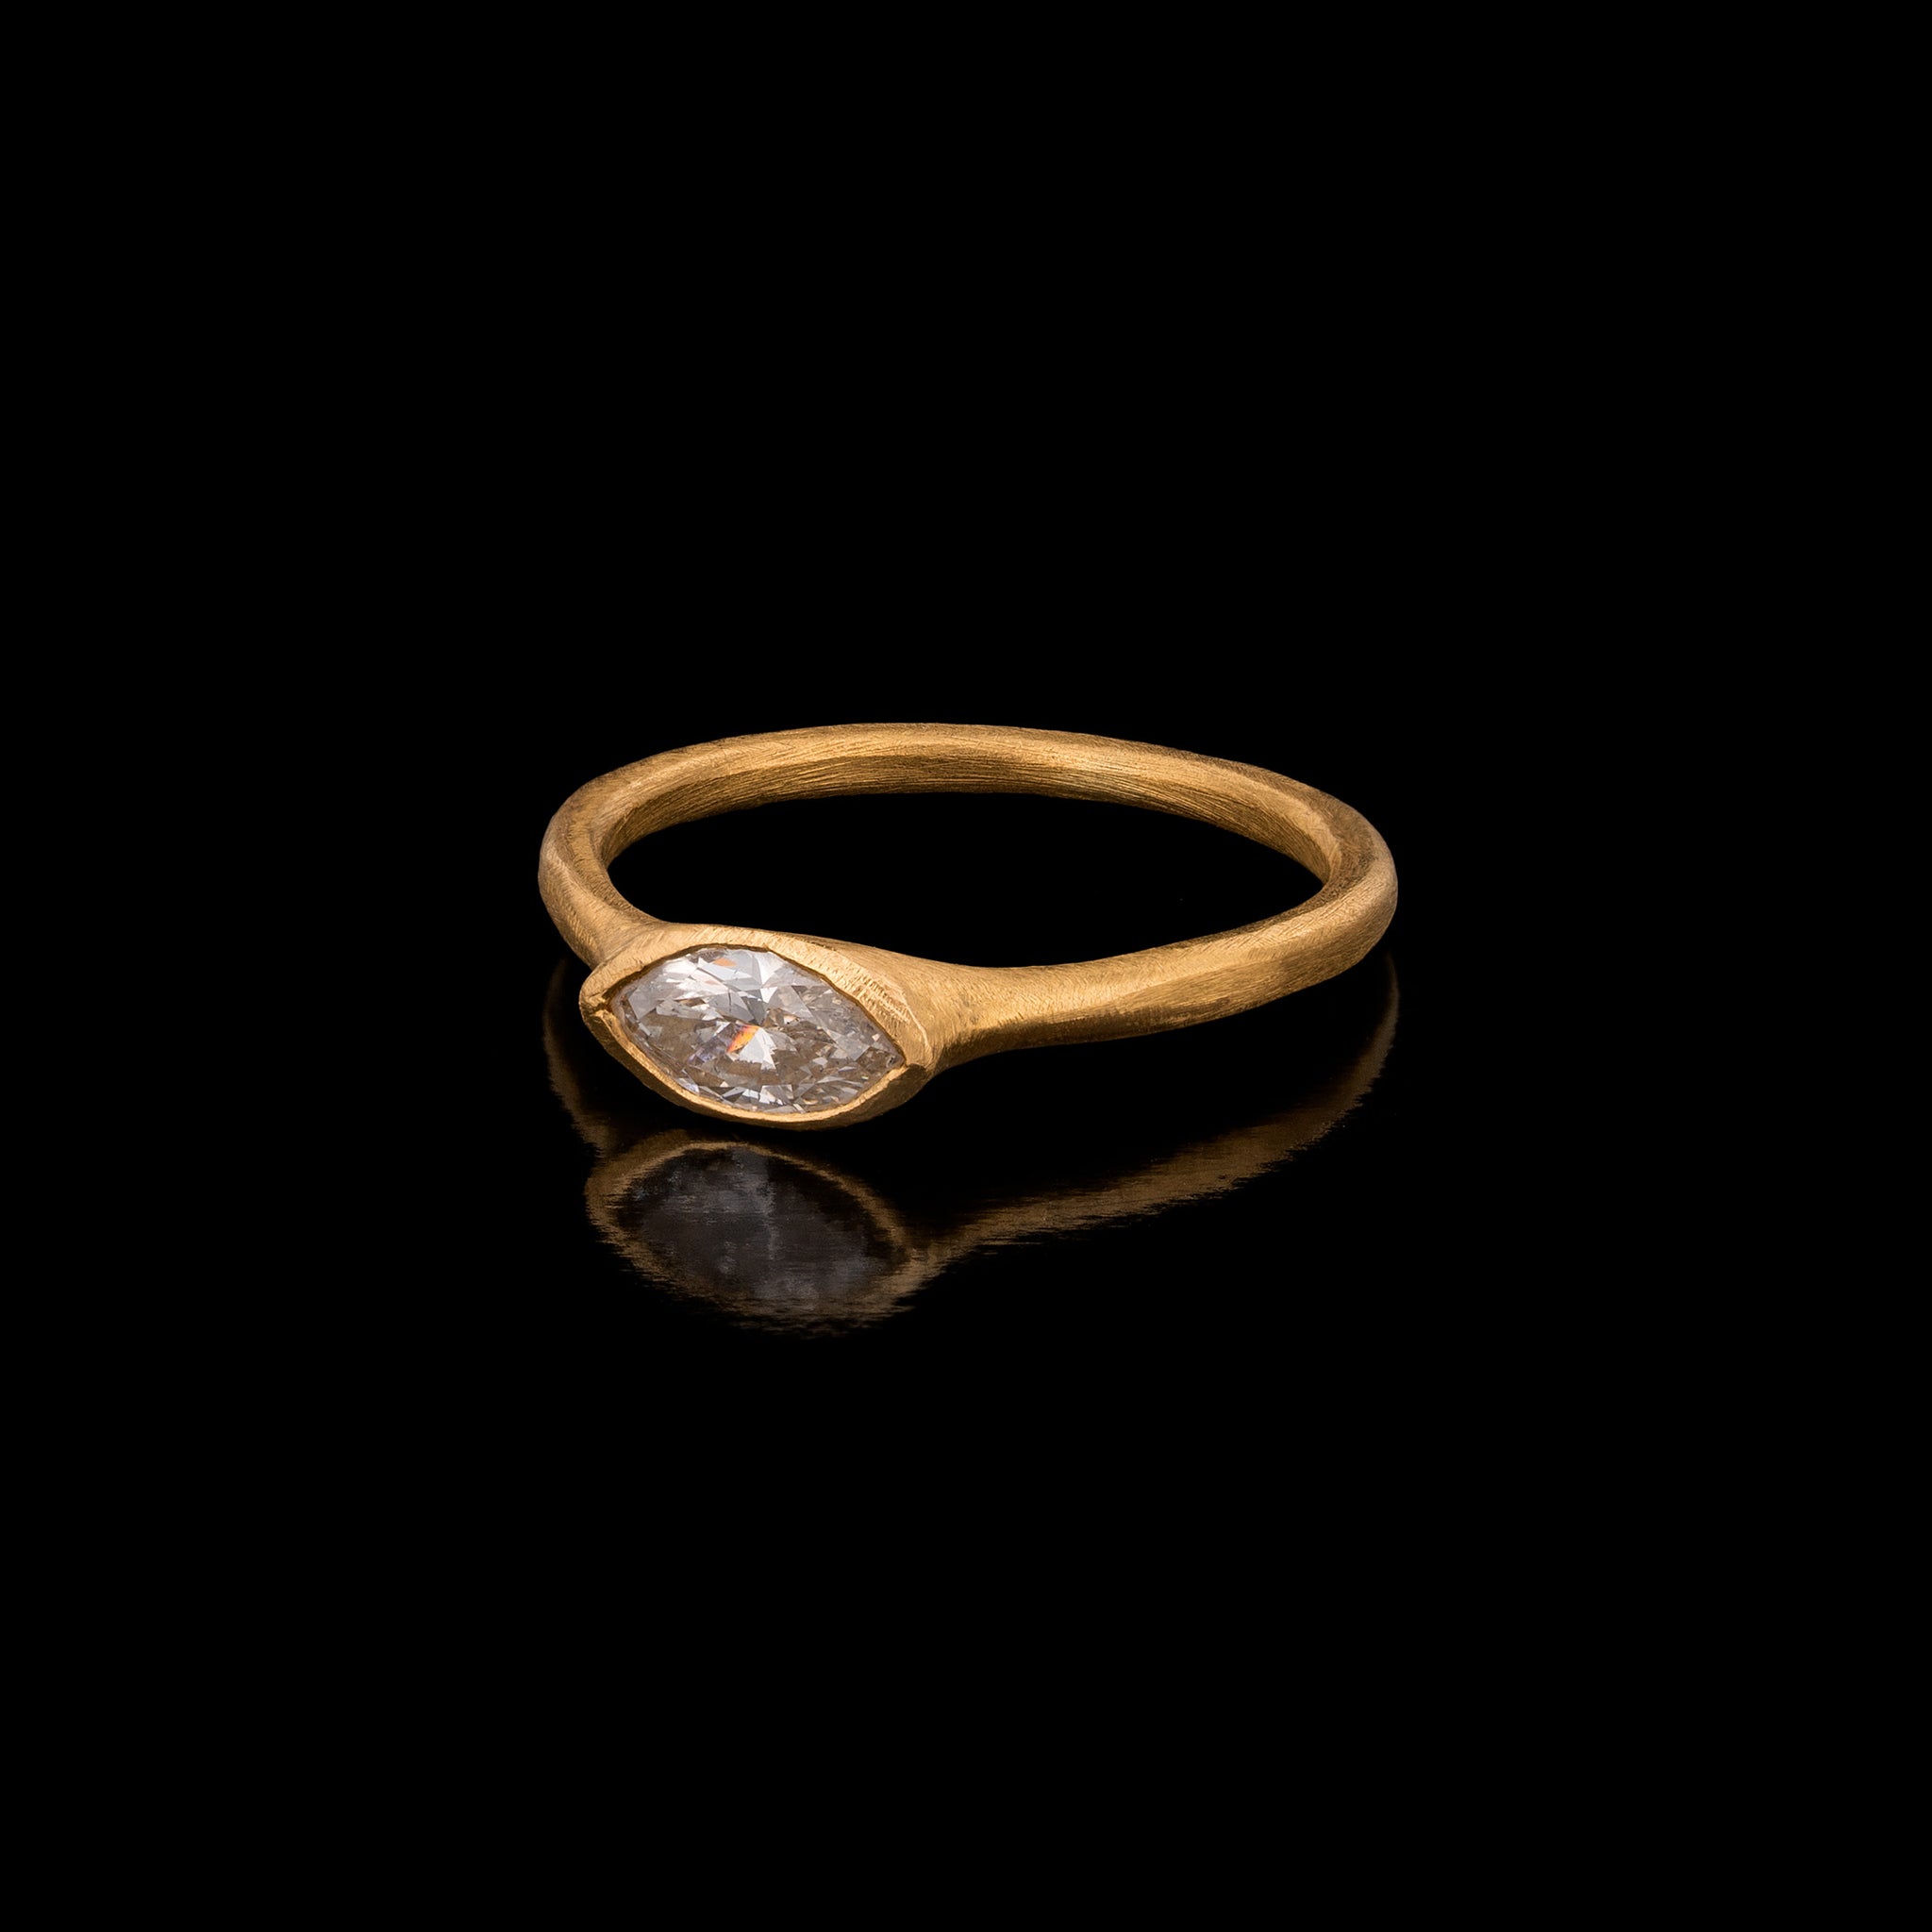 Glossy Detailed 22k Gold Ring | 22k gold ring, Gold rings, 22k gold